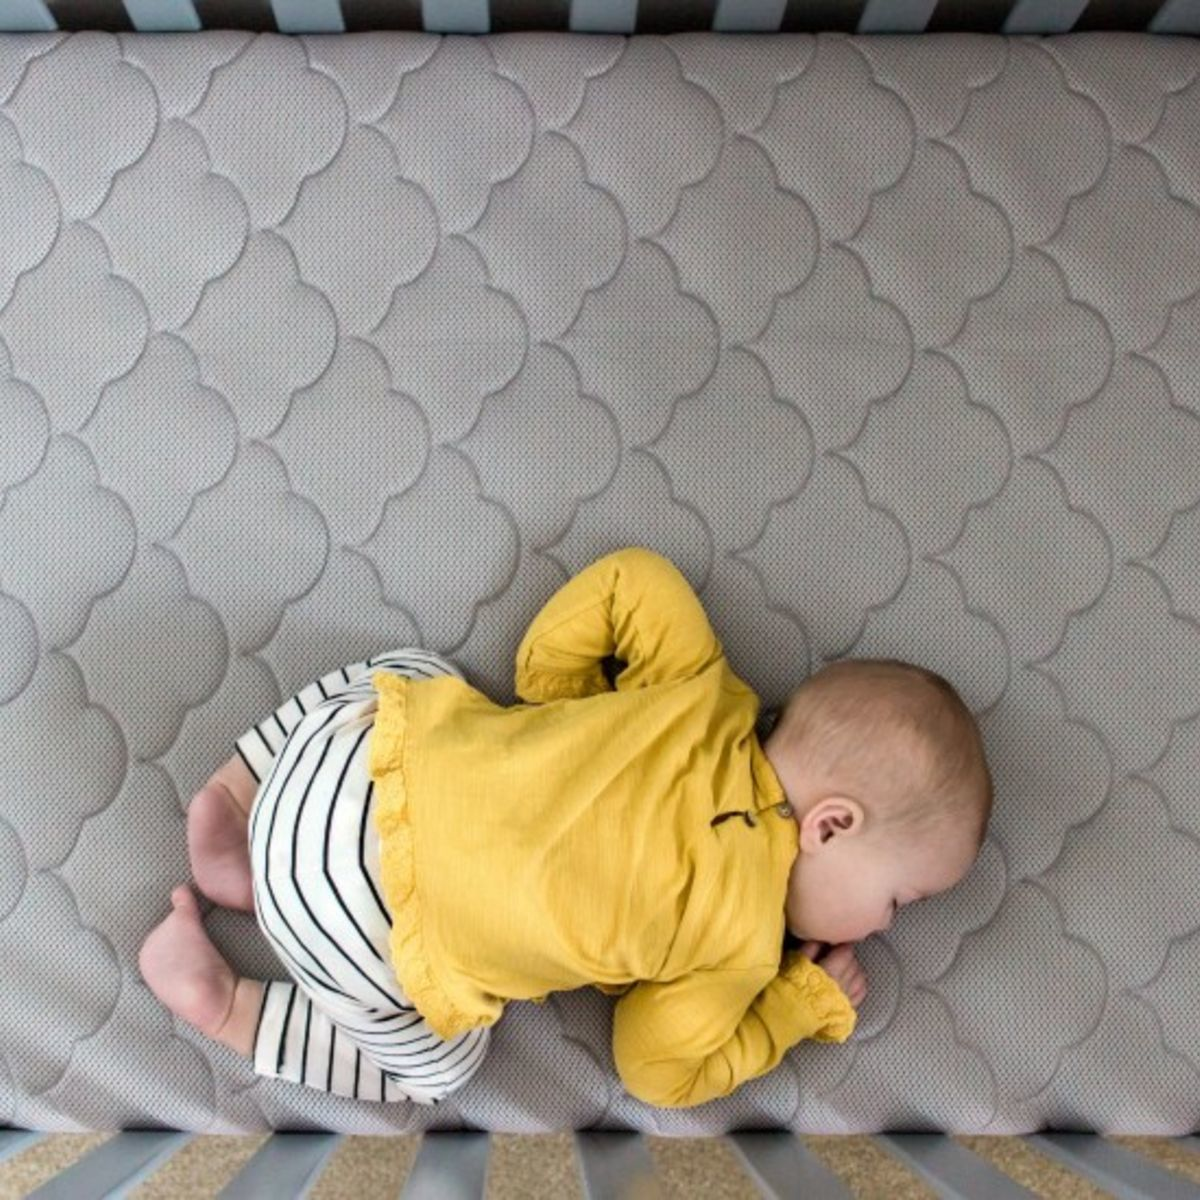 newton baby crib mattress cover